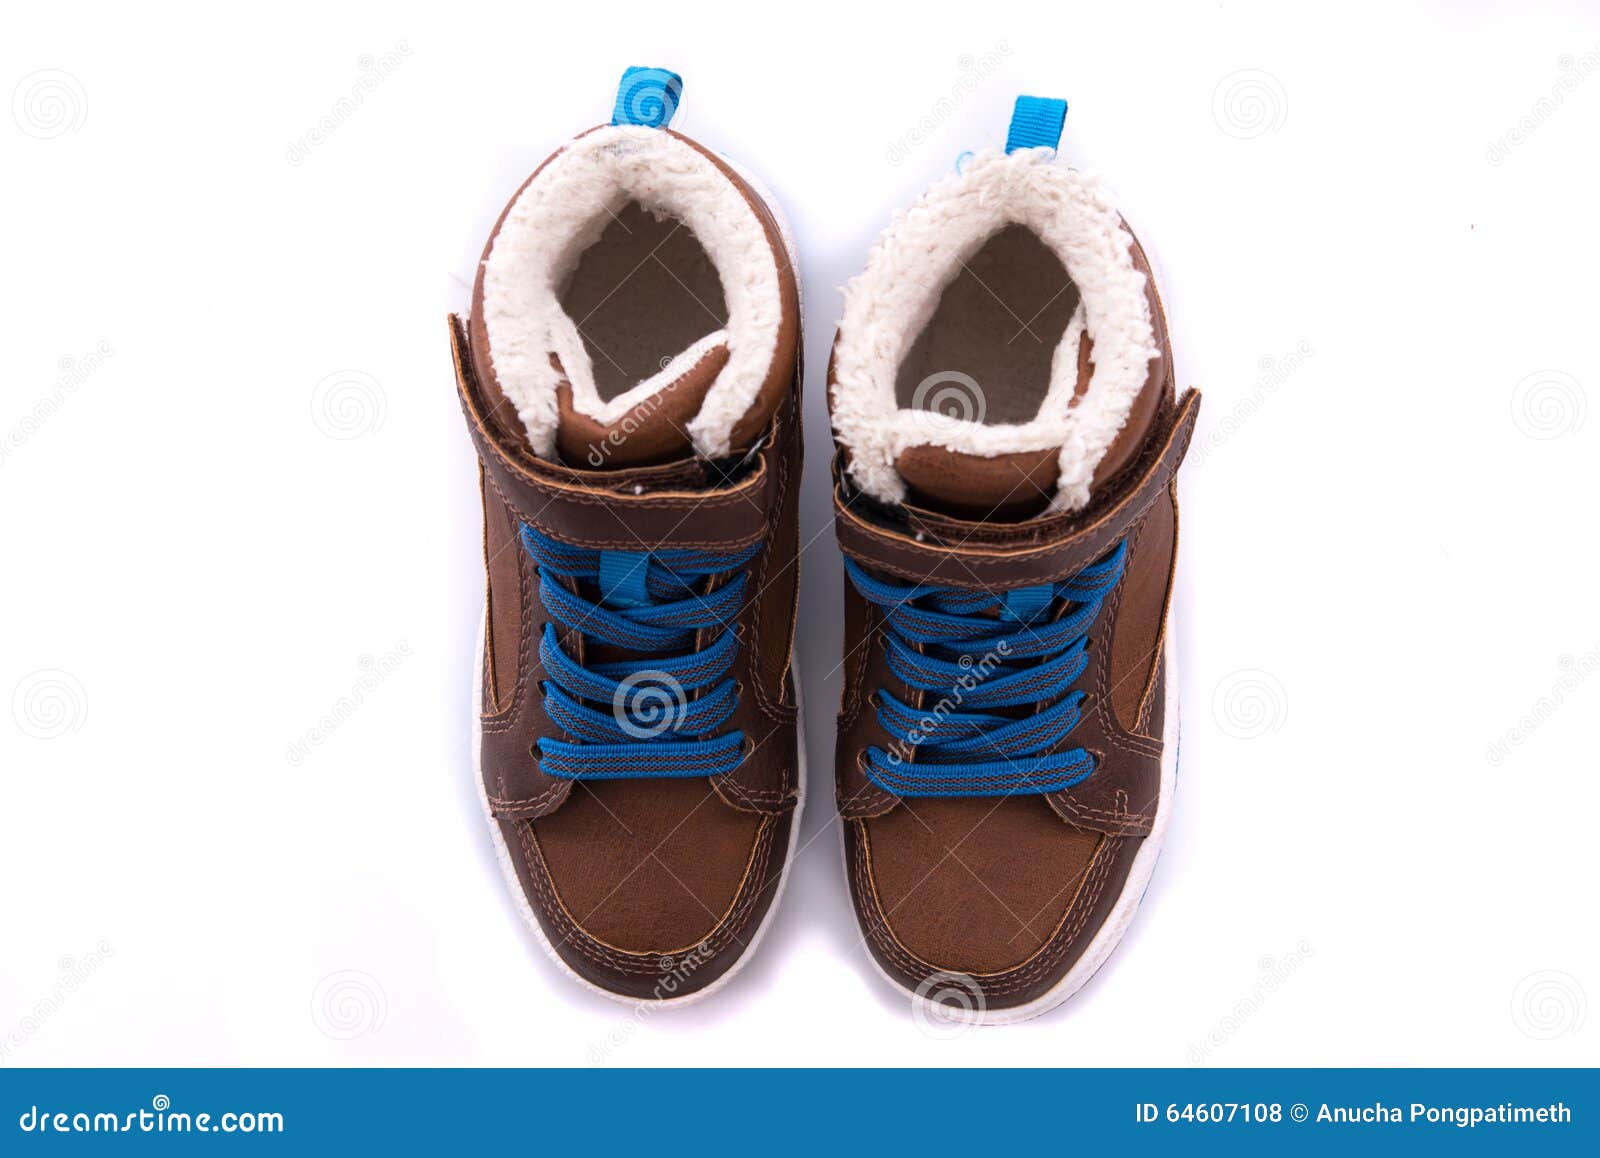 Leather kid shoe stock photo. Image of footwear, object - 64607108